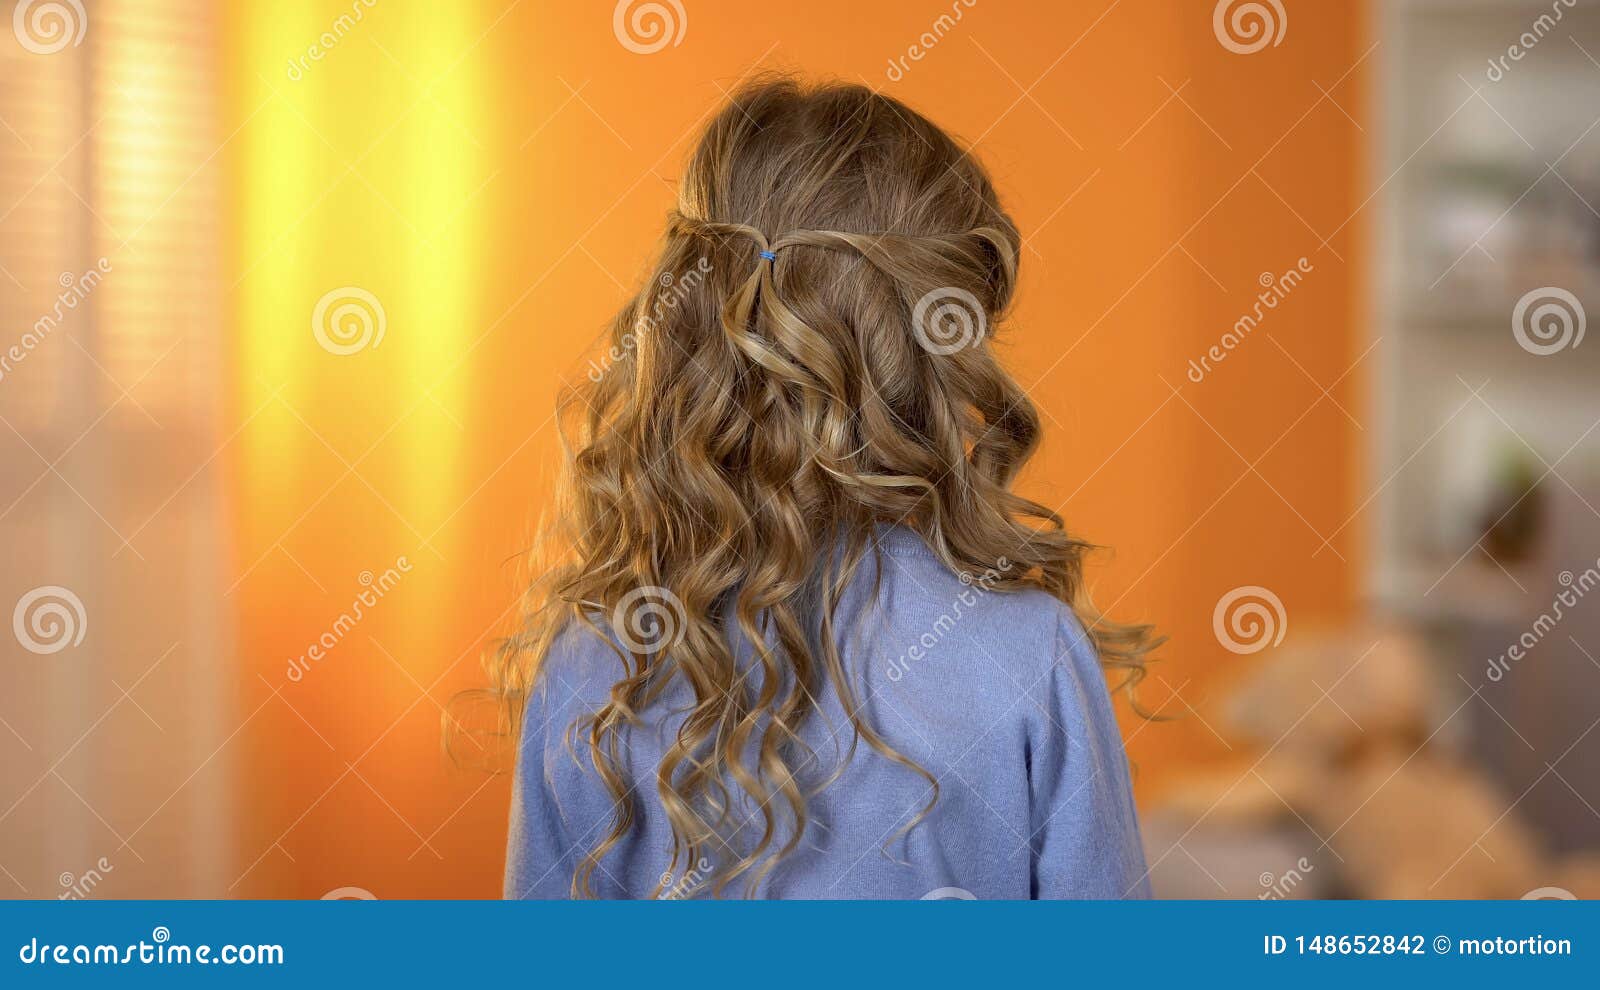 10. Blonde Hair Clips by Ibiza Hair - wide 2